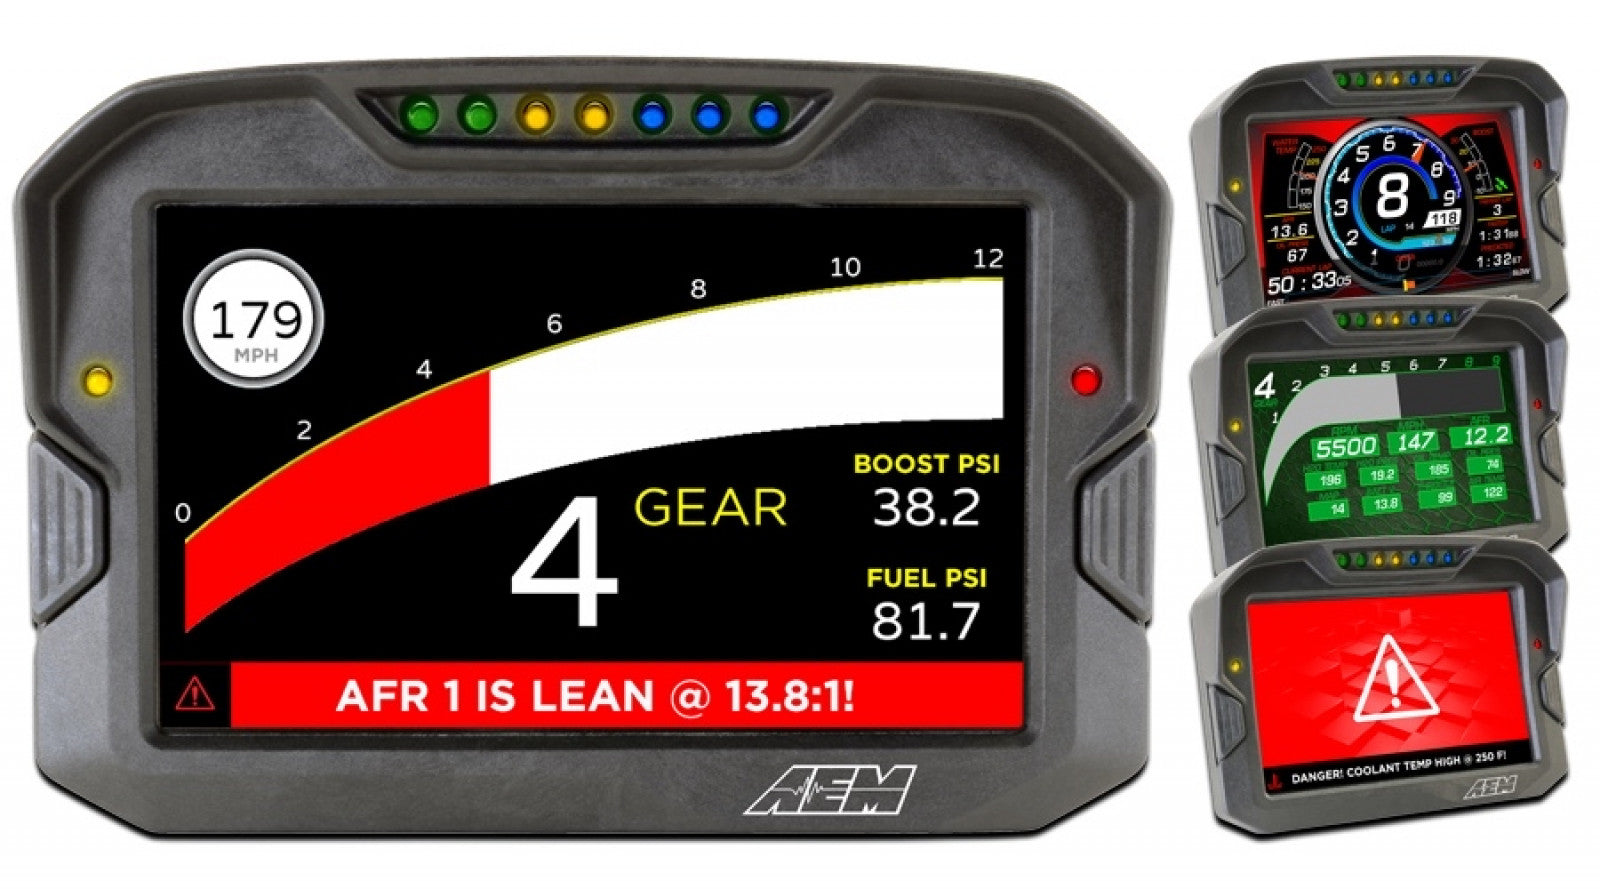 AEM Non-Logging/Non-GPS CD-7 Carbon Digital Racing Dash